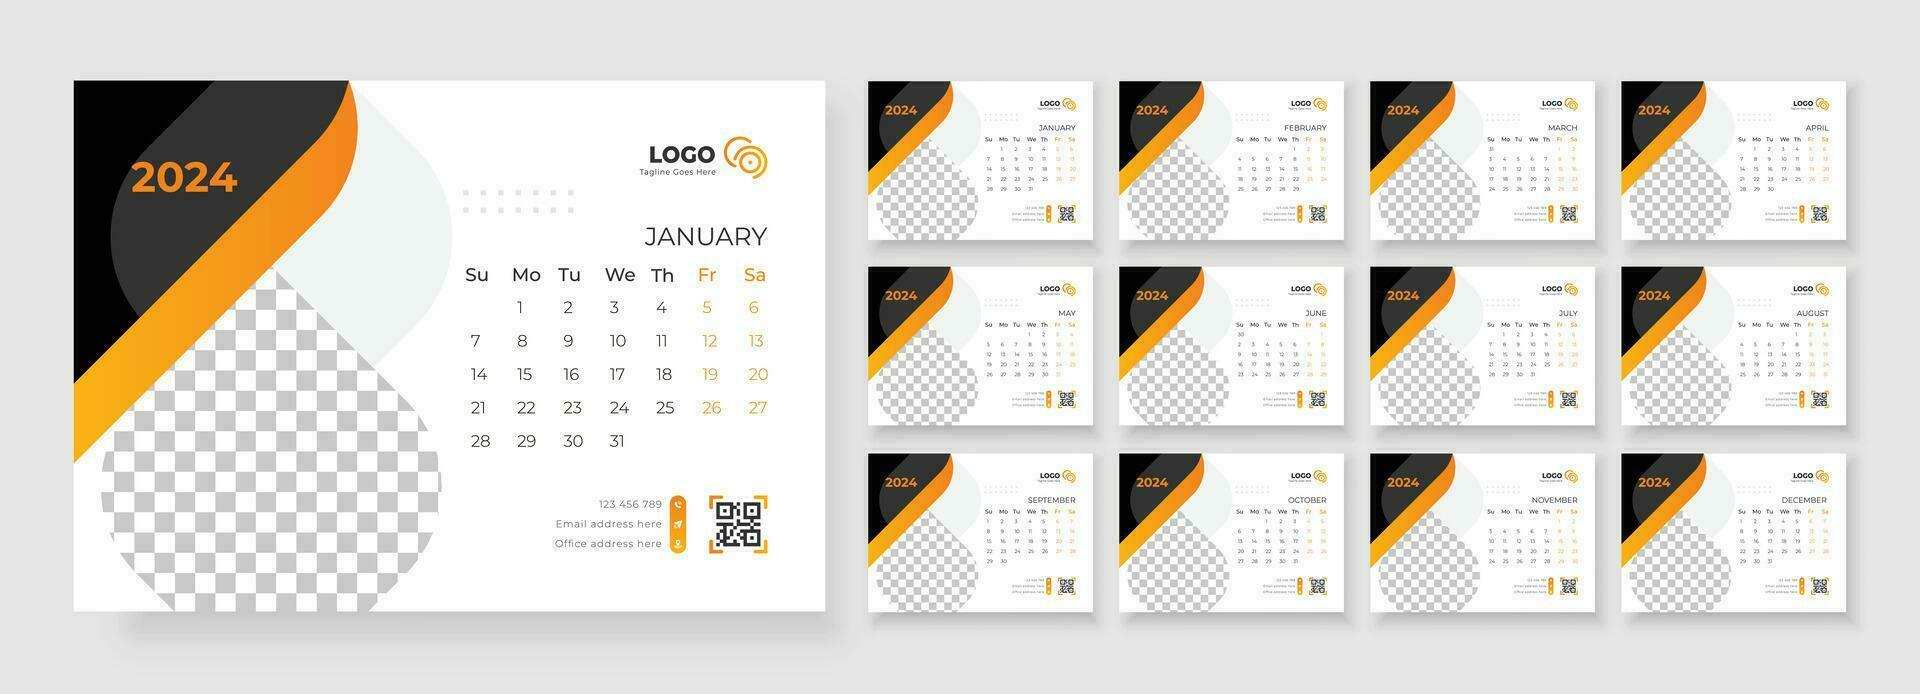 Desk Calendar 2024. Template for annual calendar 2024. Desk calendar calendar in a minimalist style. vector